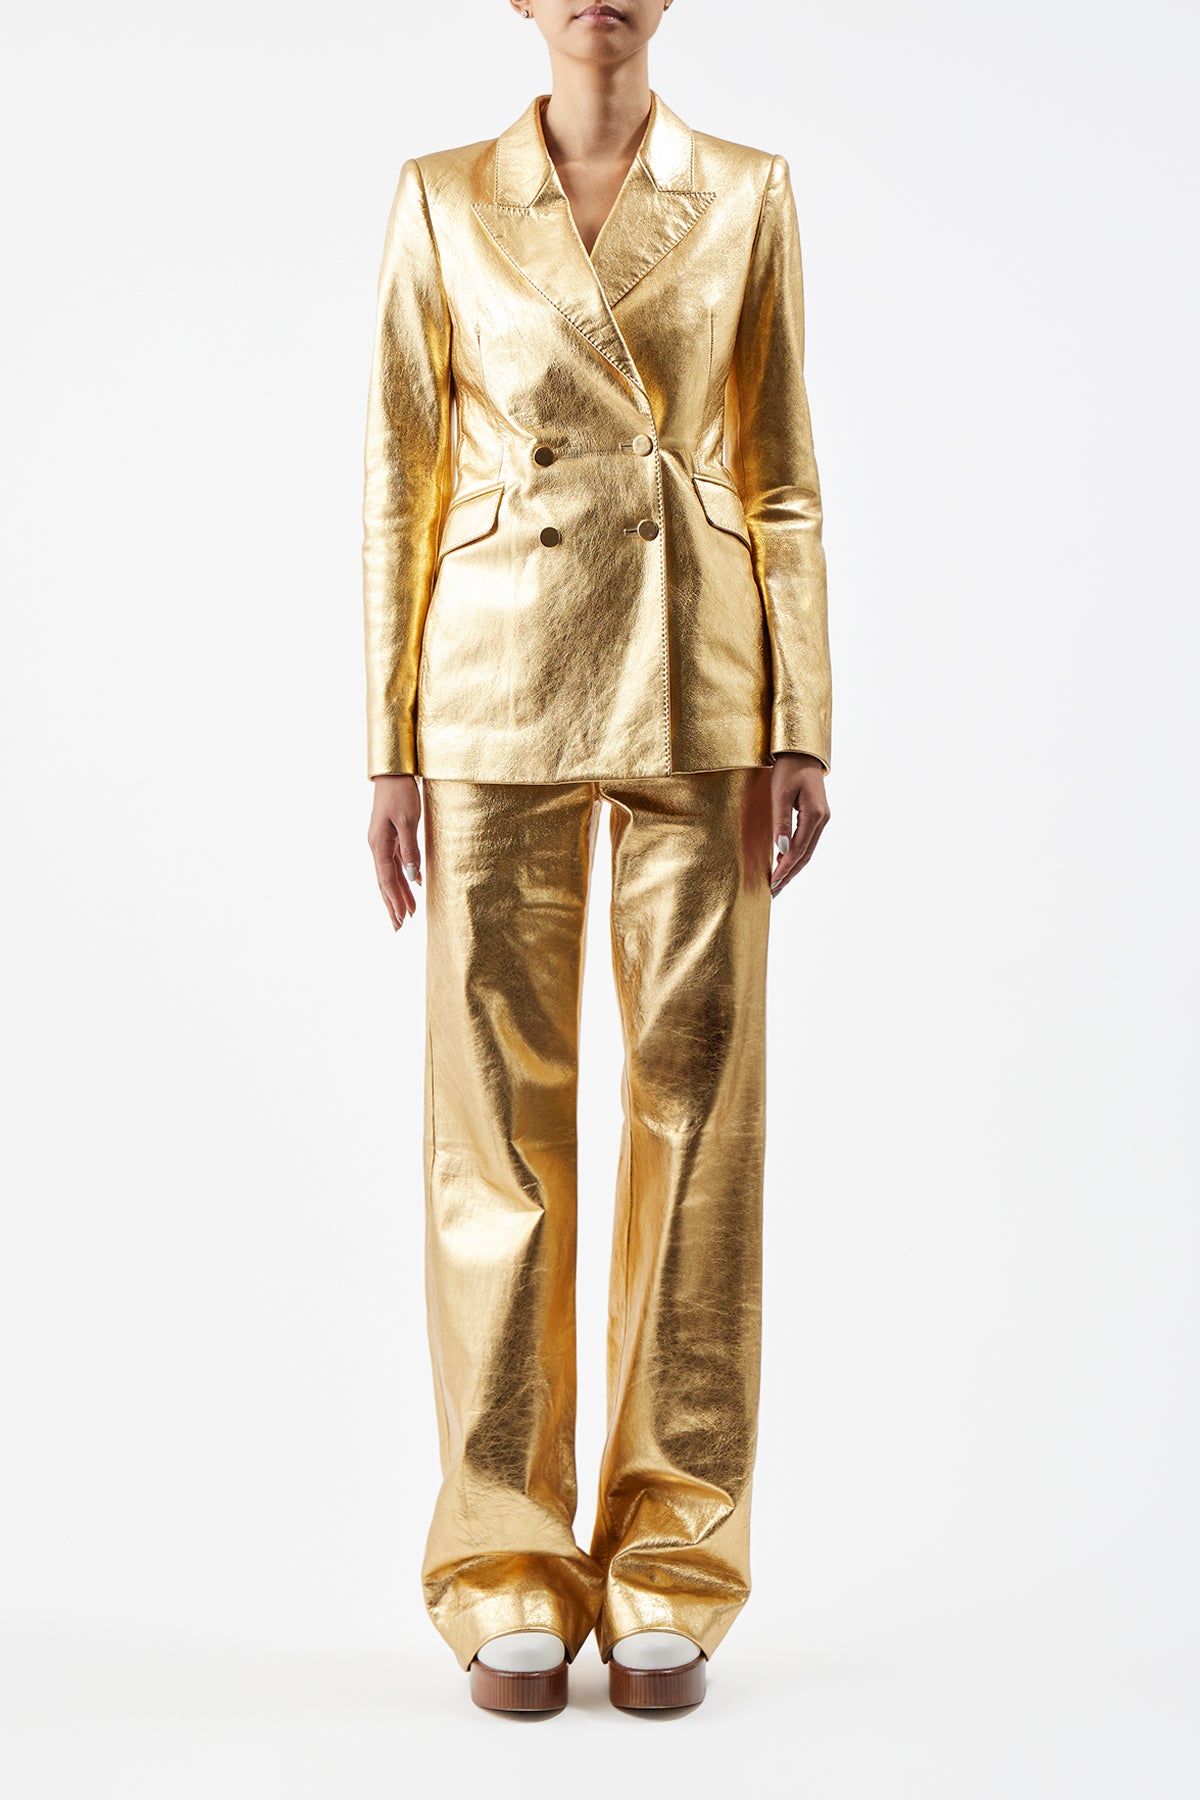 Vesta Pant in Gold Leather